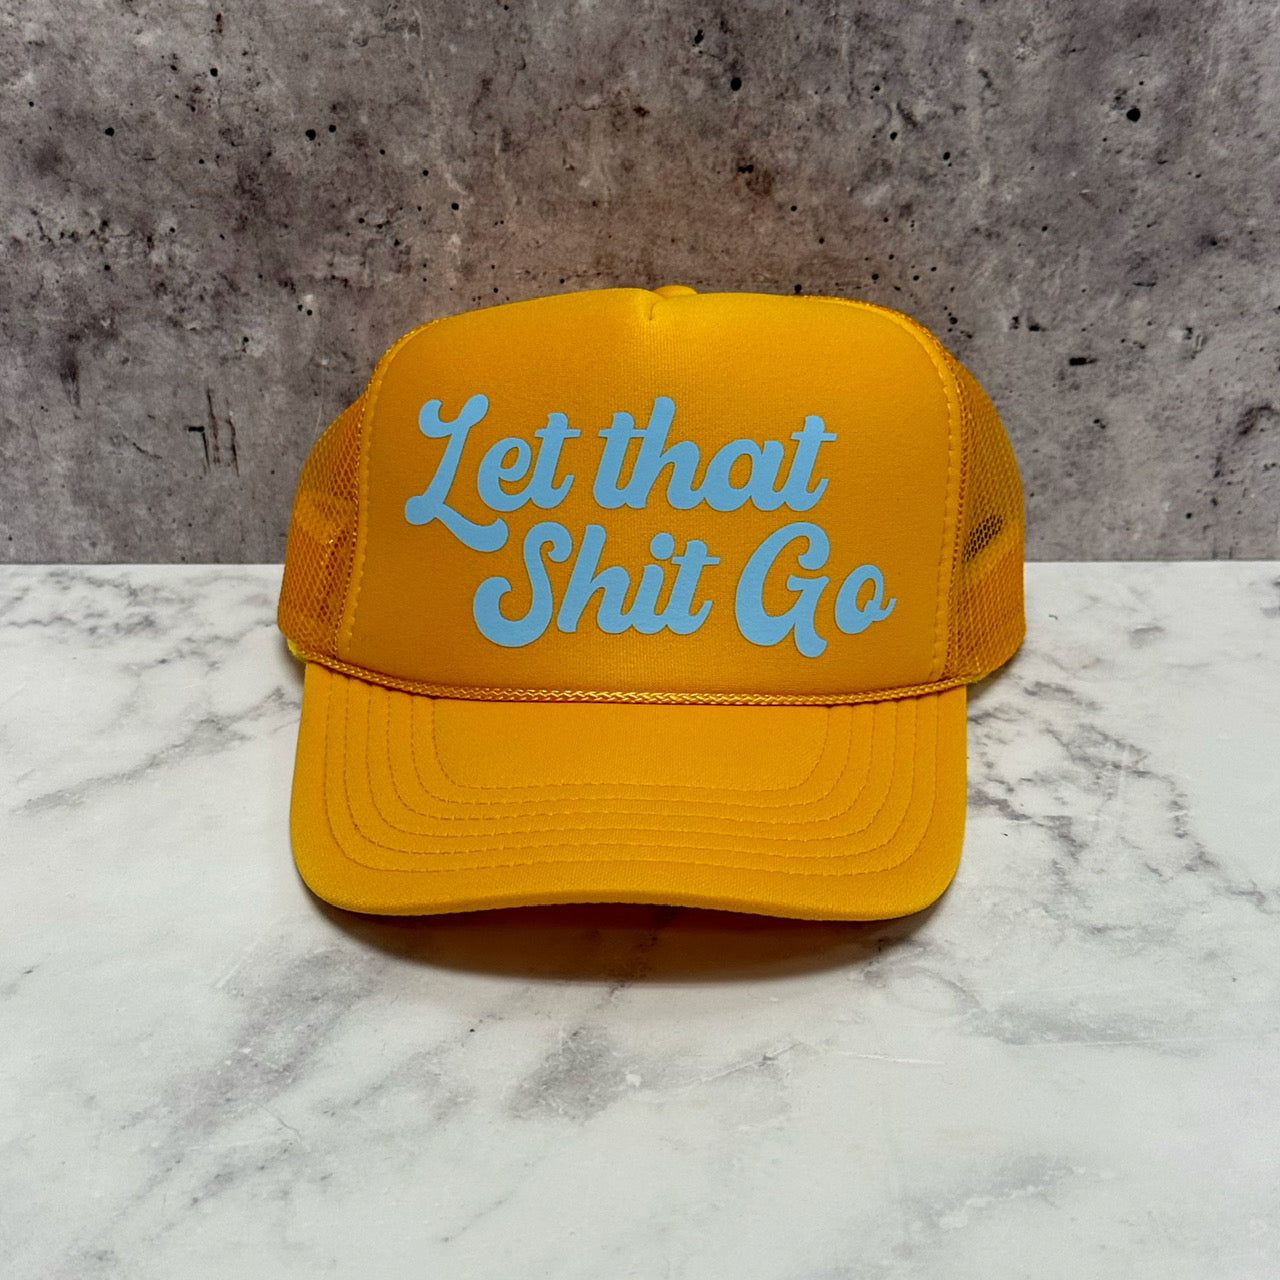 Let that Sh!t Go Trucker Hat